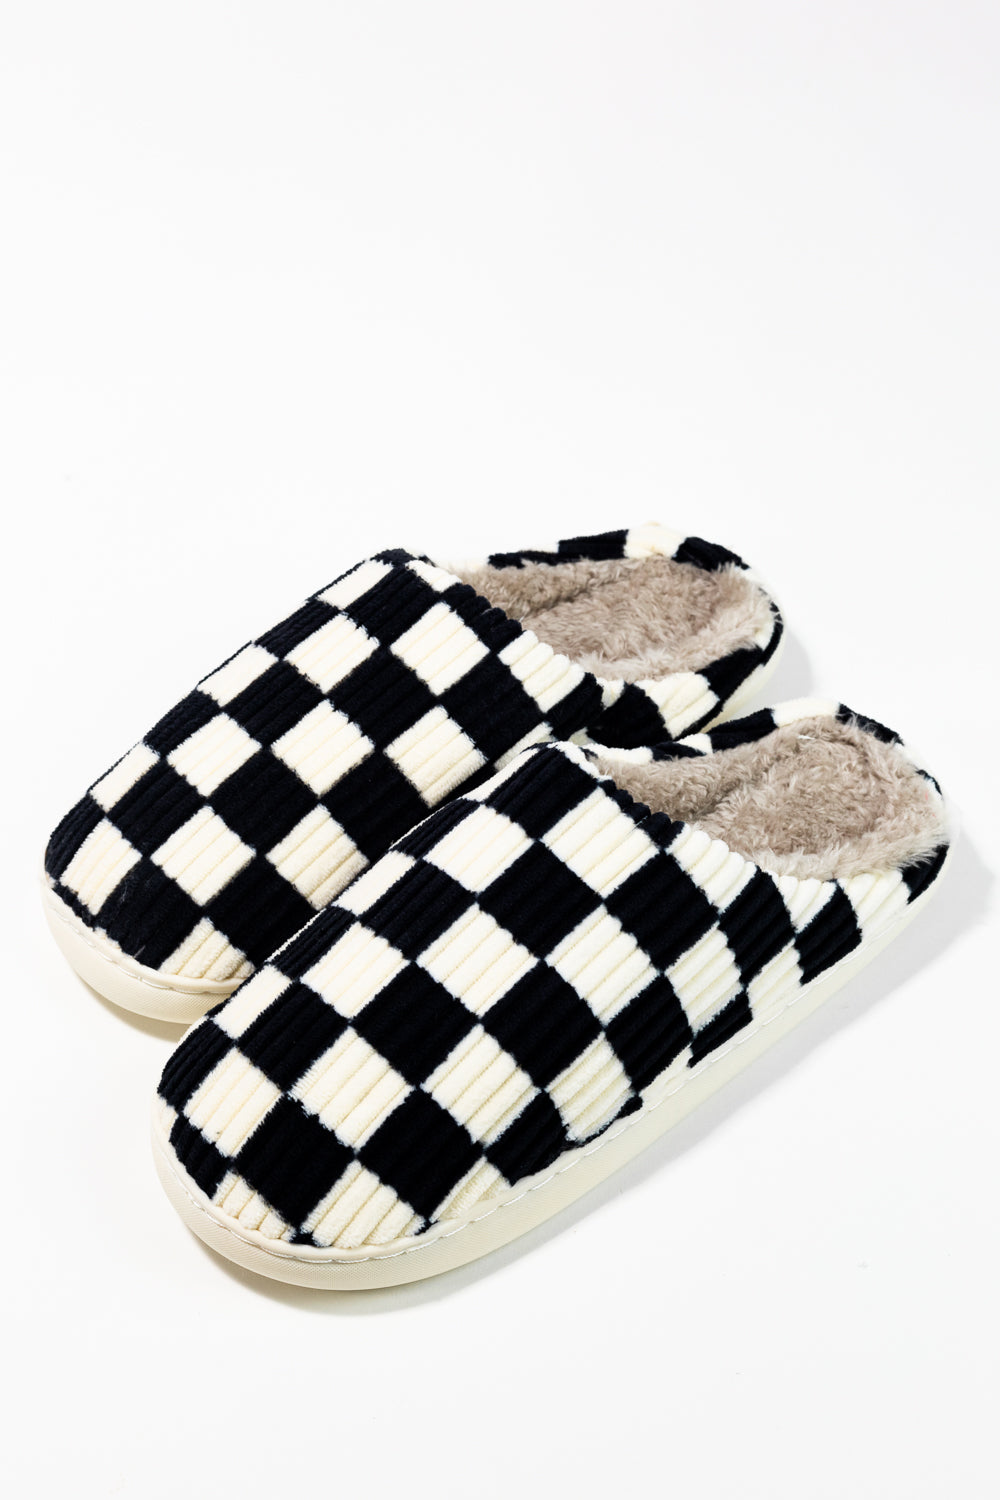 Black & White Checkered Slippers